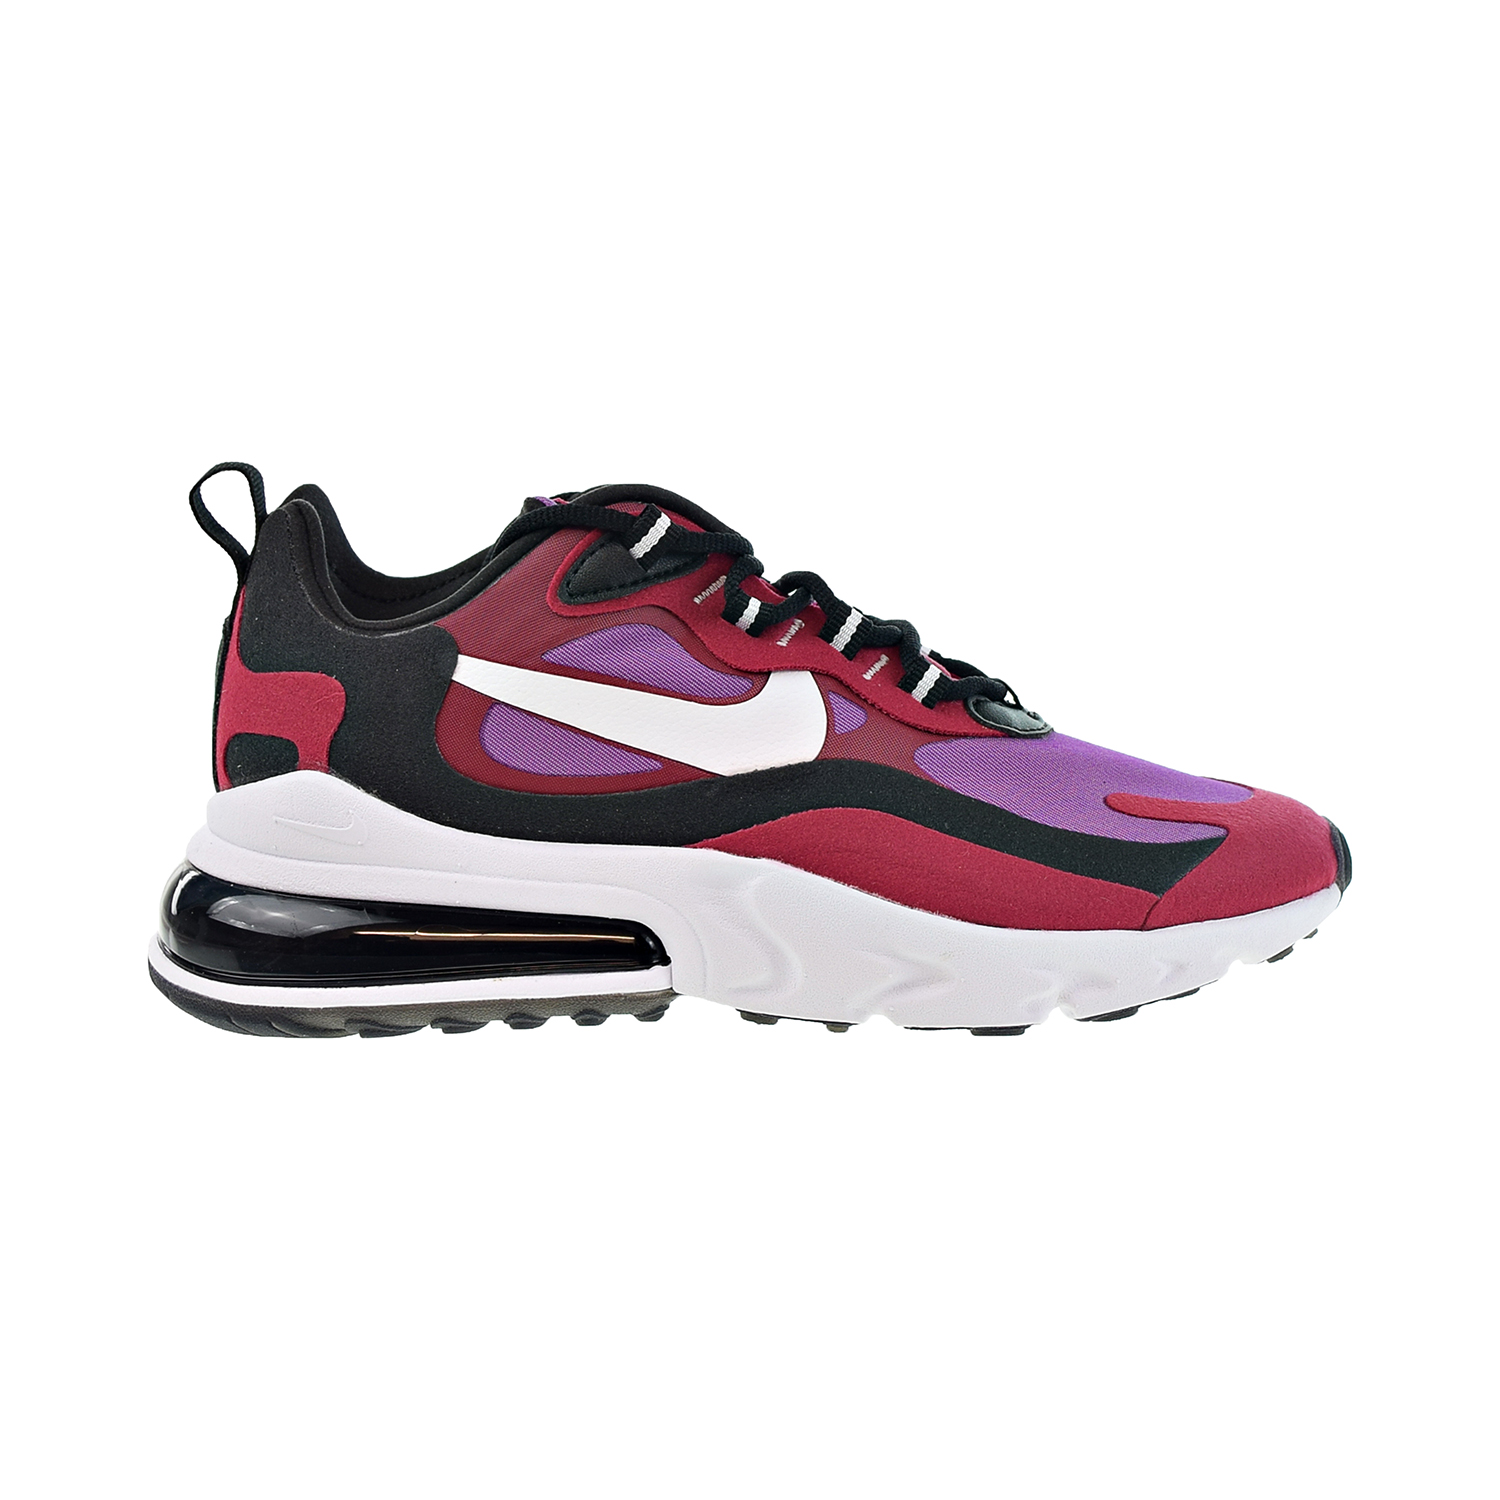 Nike Air Max 270 React Women's Shoes Noble Red-Black-Vivid Purple ci3899-600 - image 1 of 6